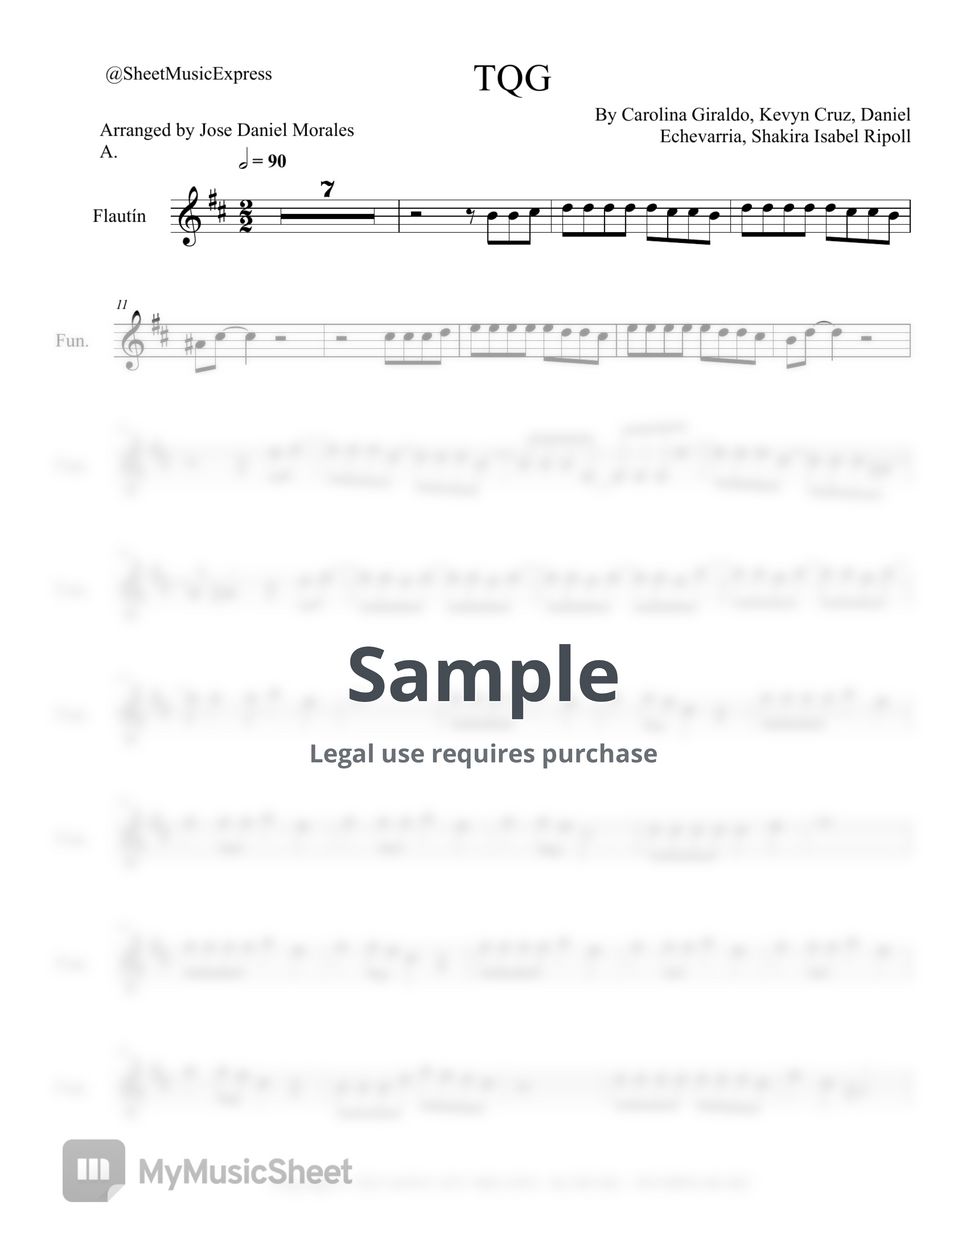 Karol G - TQG piccolo (Latin) by Sheet Music Express